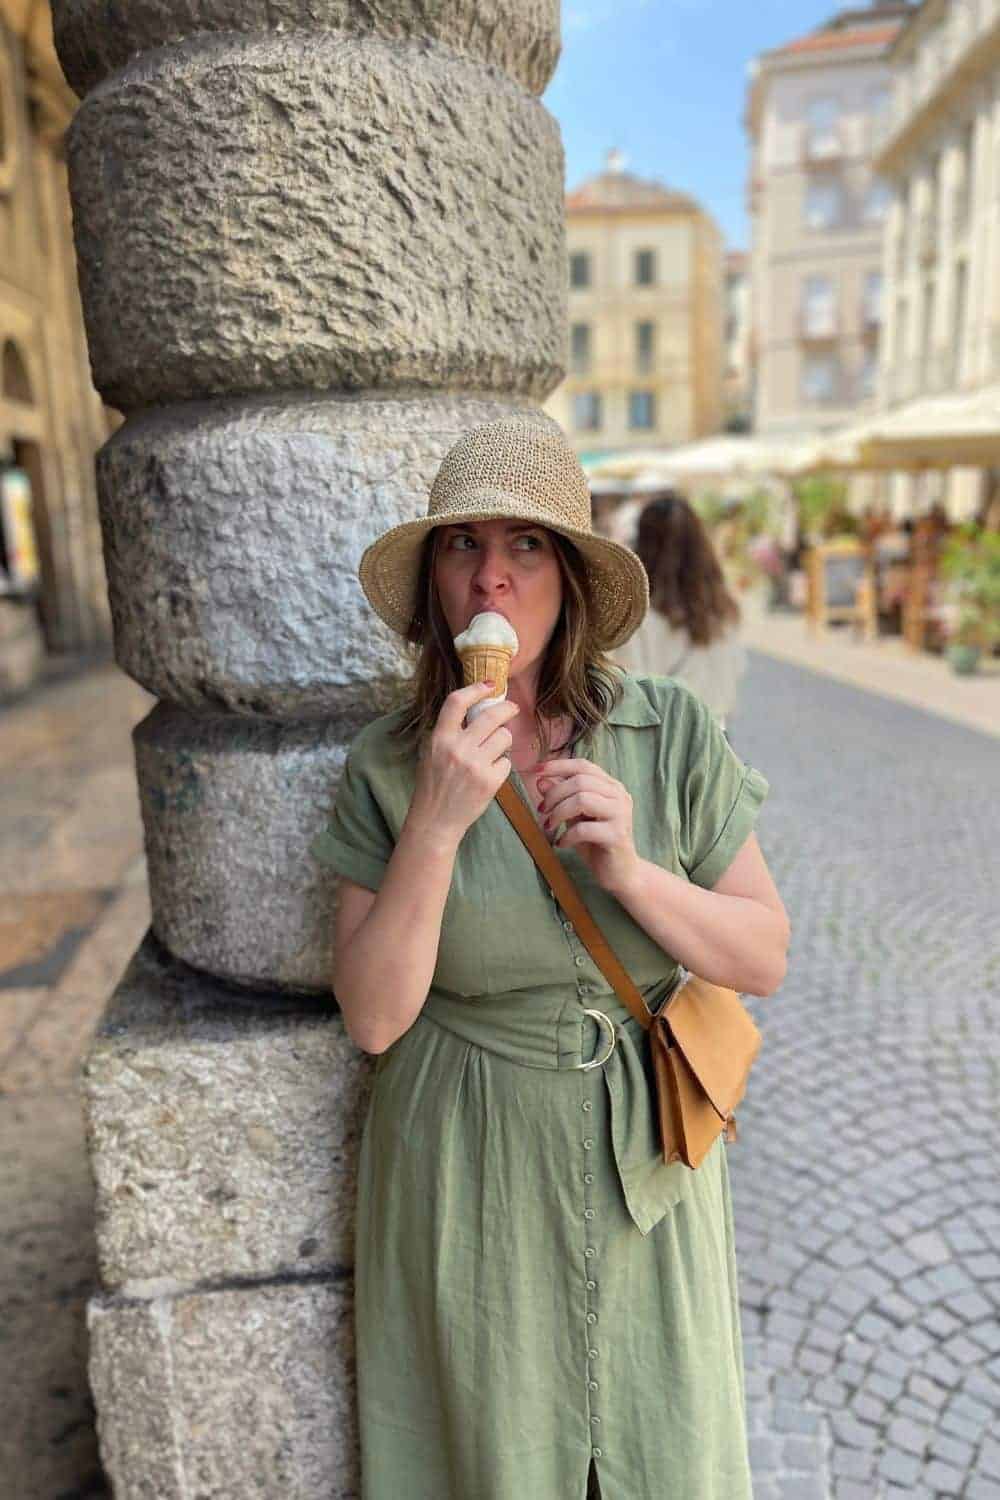 A woman alone in Verona eating ice cream